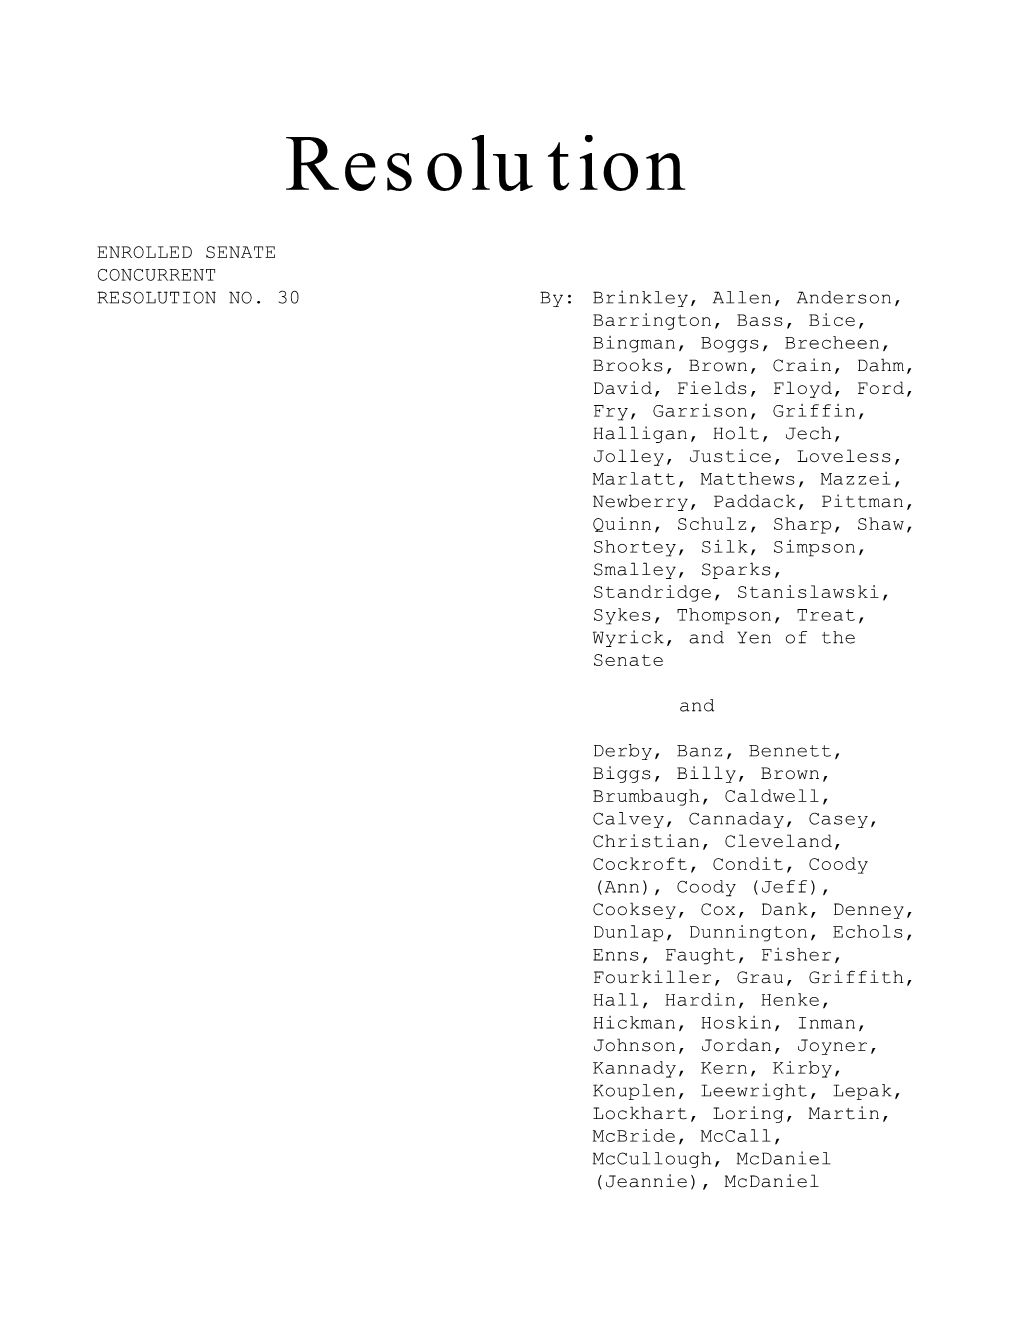 Resolution No